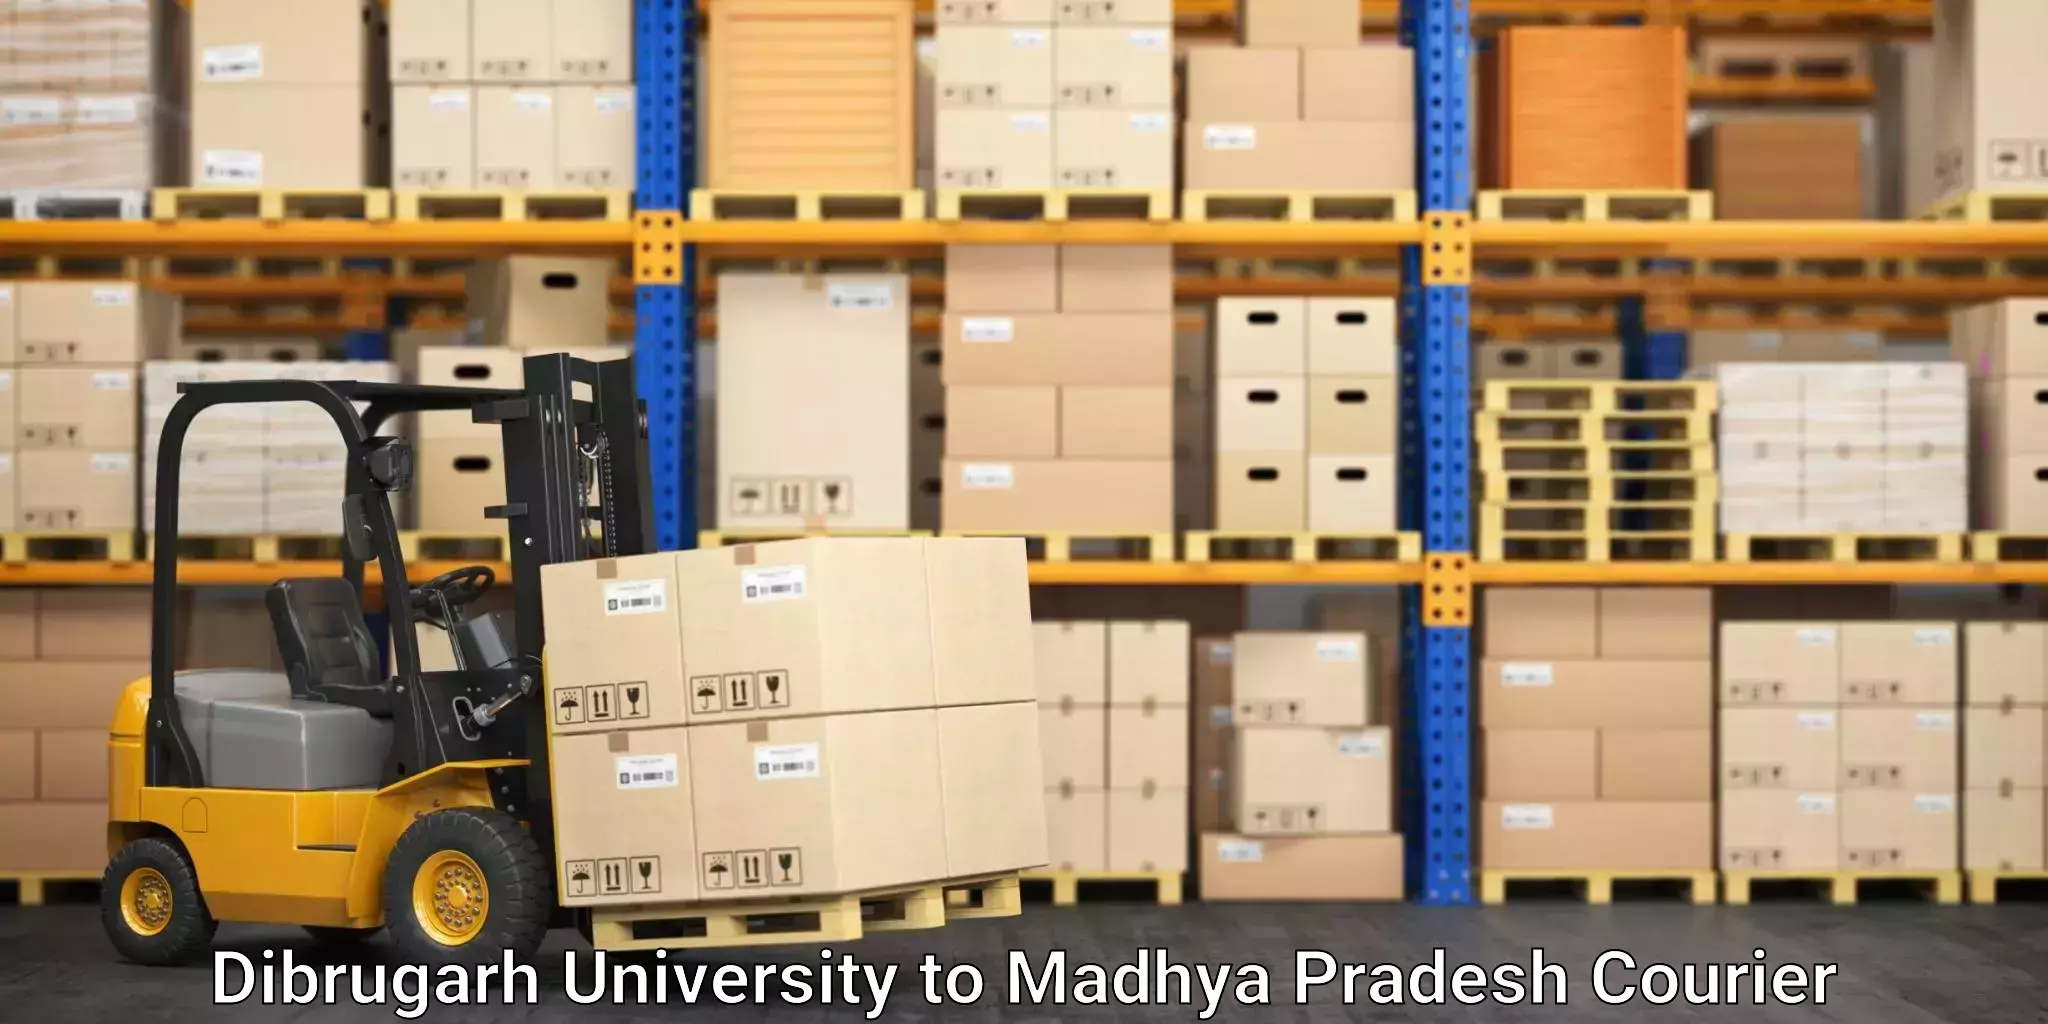 Ground shipping in Dibrugarh University to Banda Sagar